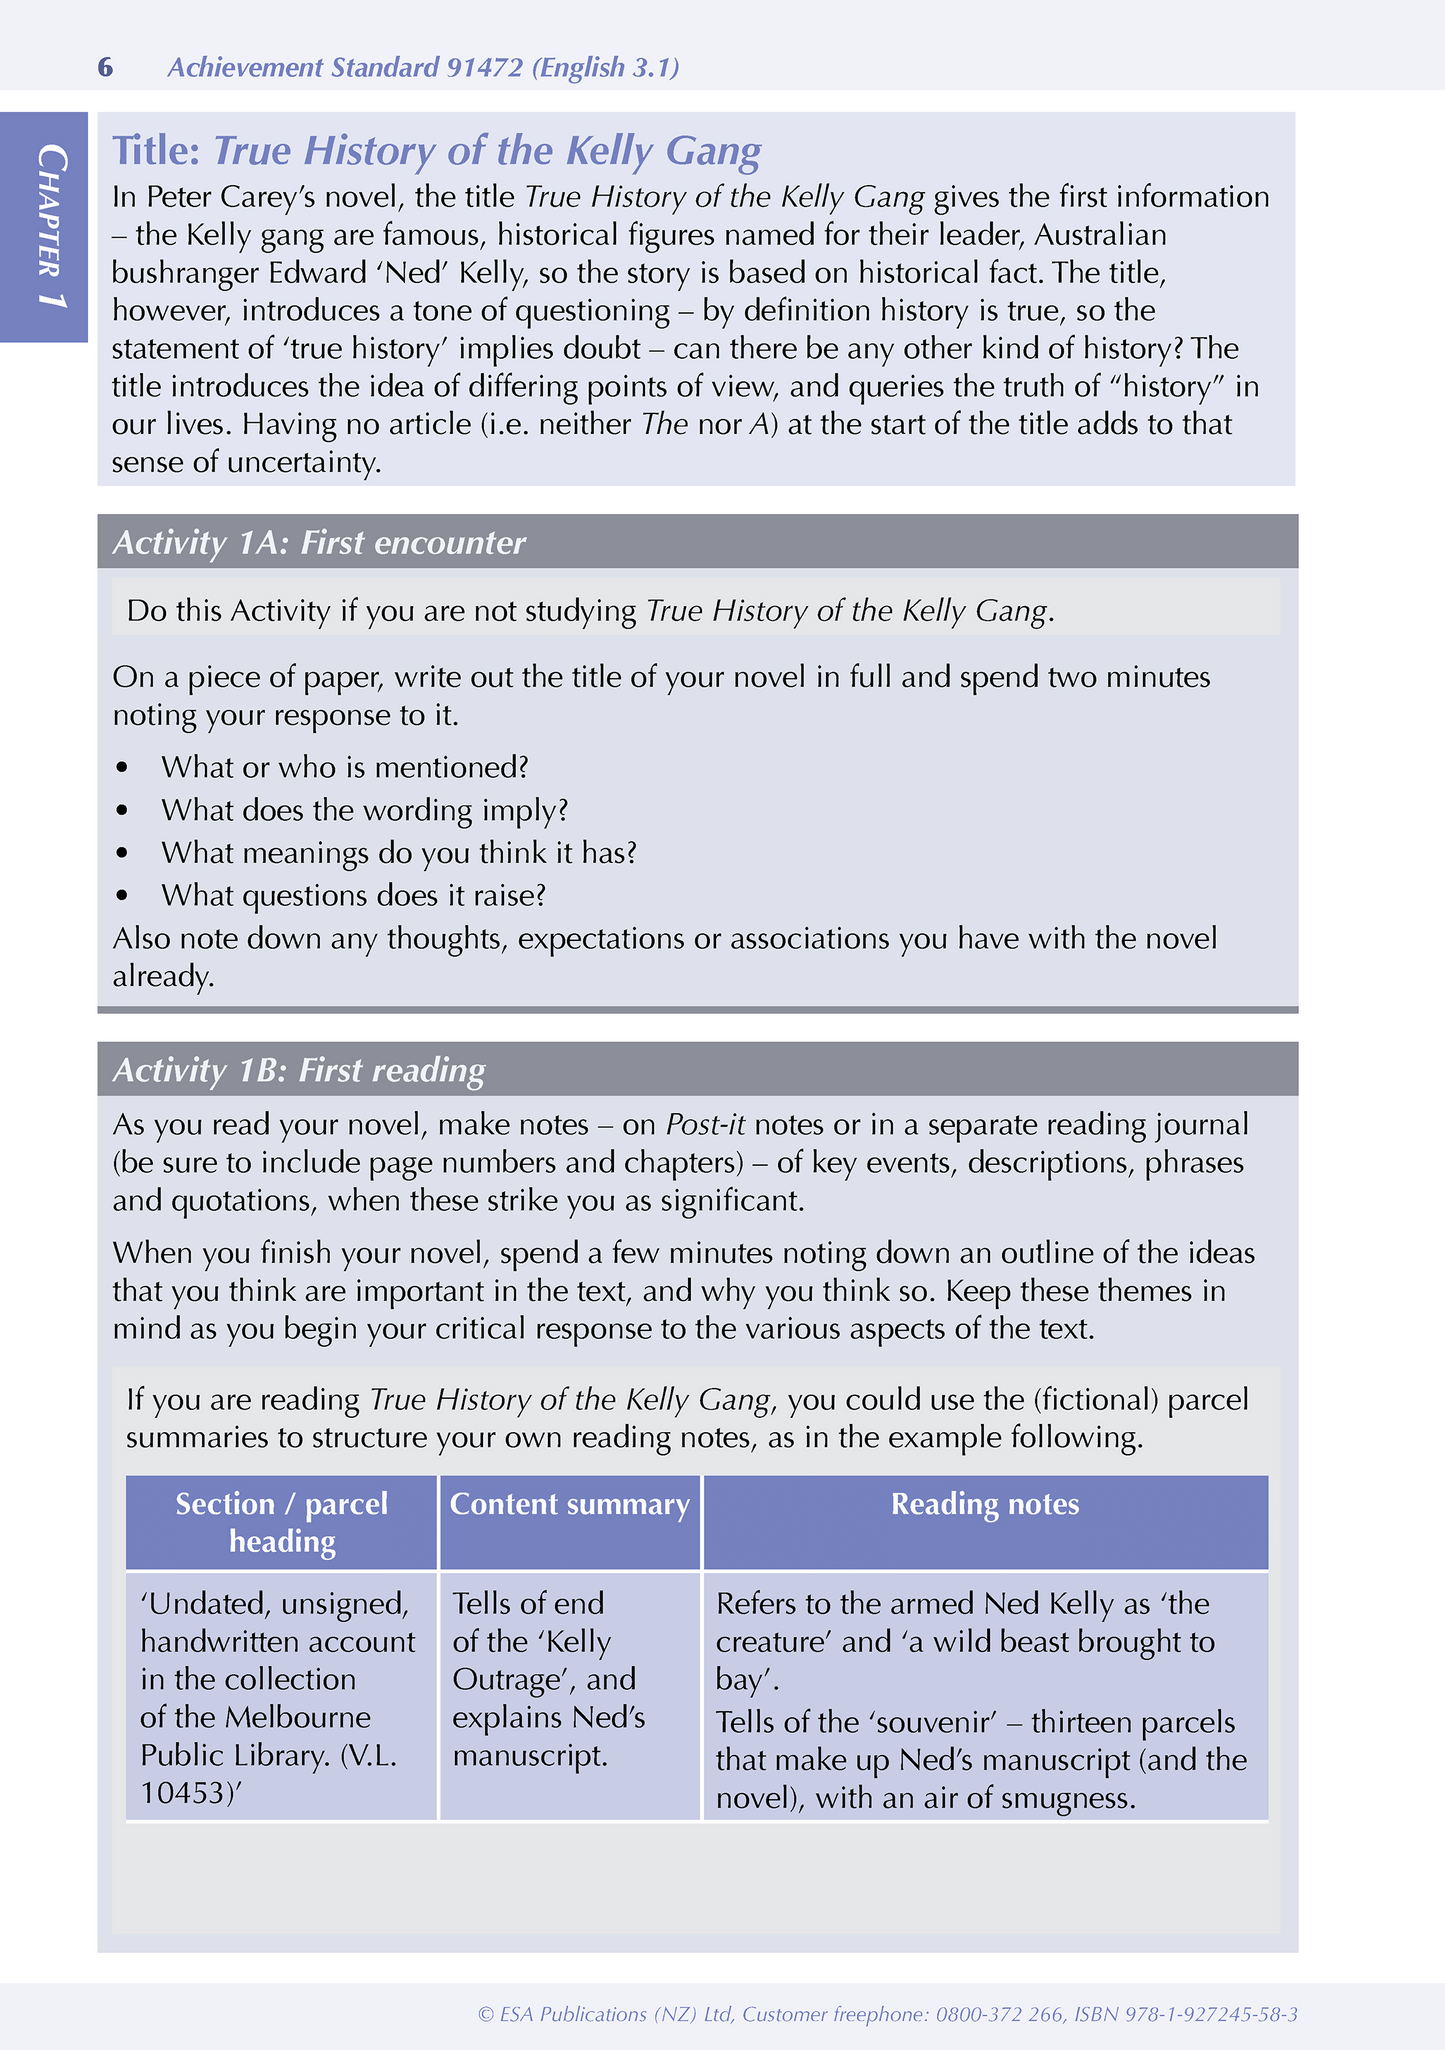 Level 3 English ESA Study Guide